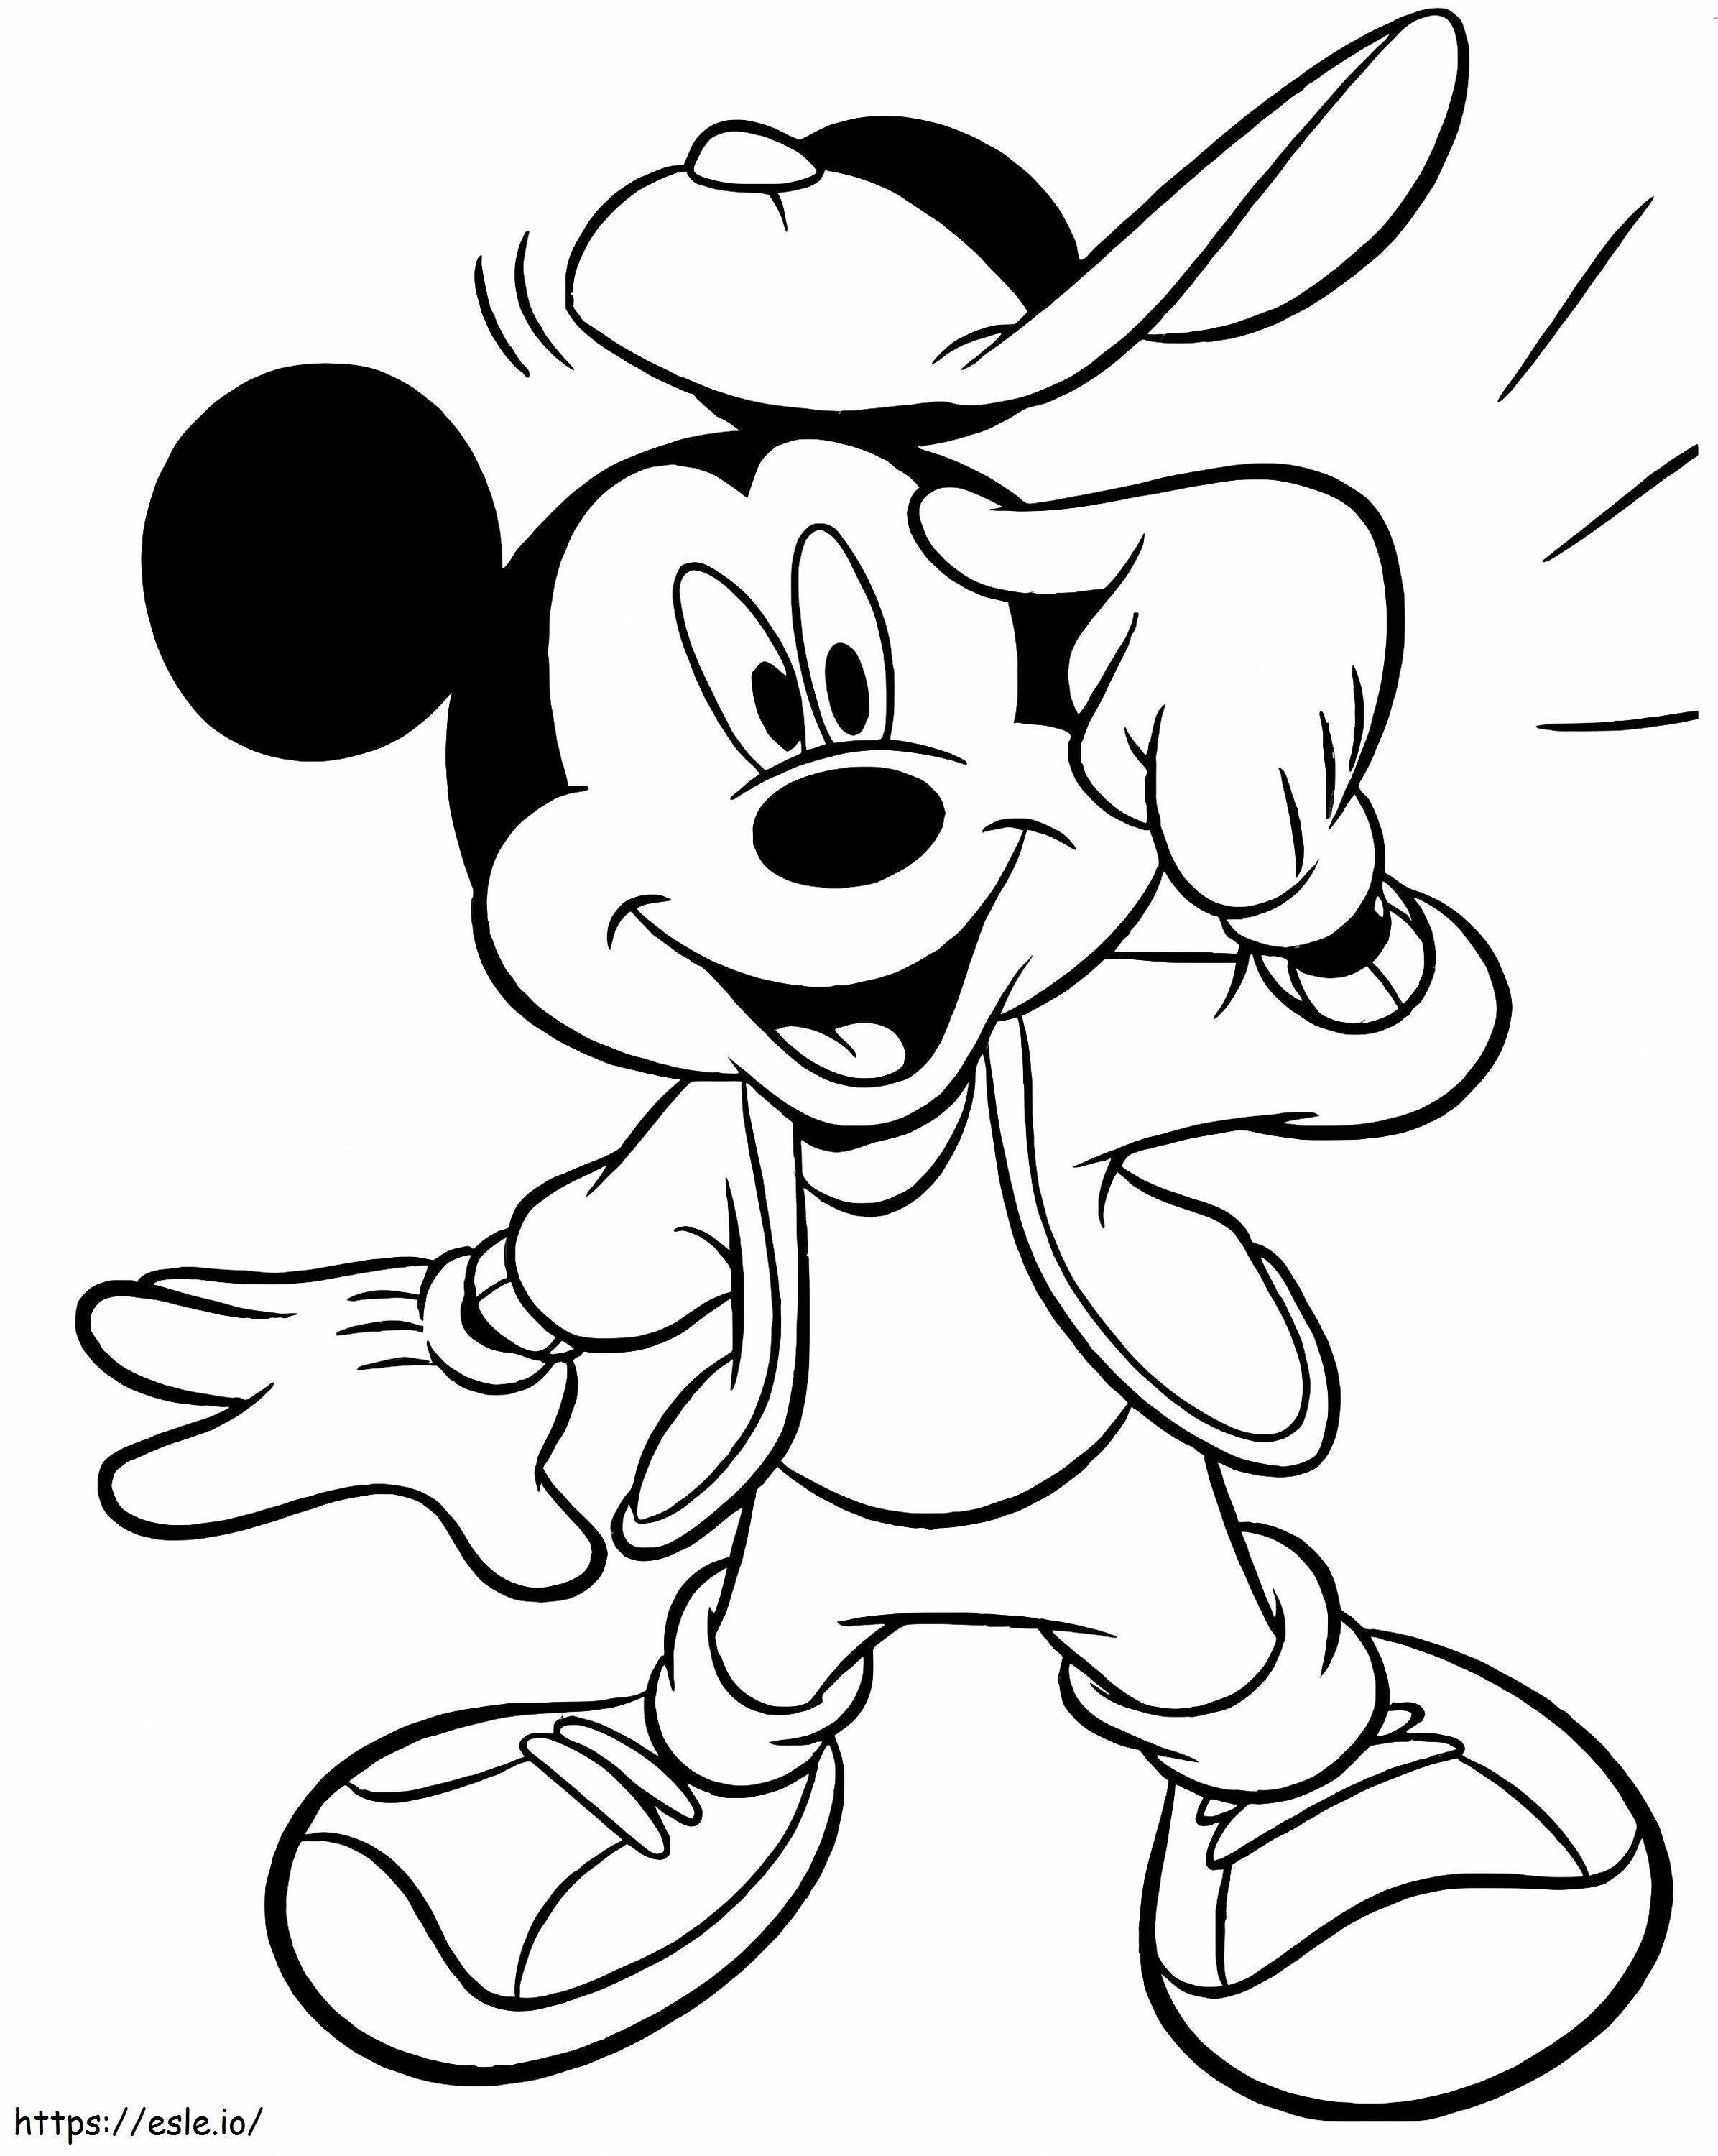 Mickey Mouse Grappig kleurplaat kleurplaat